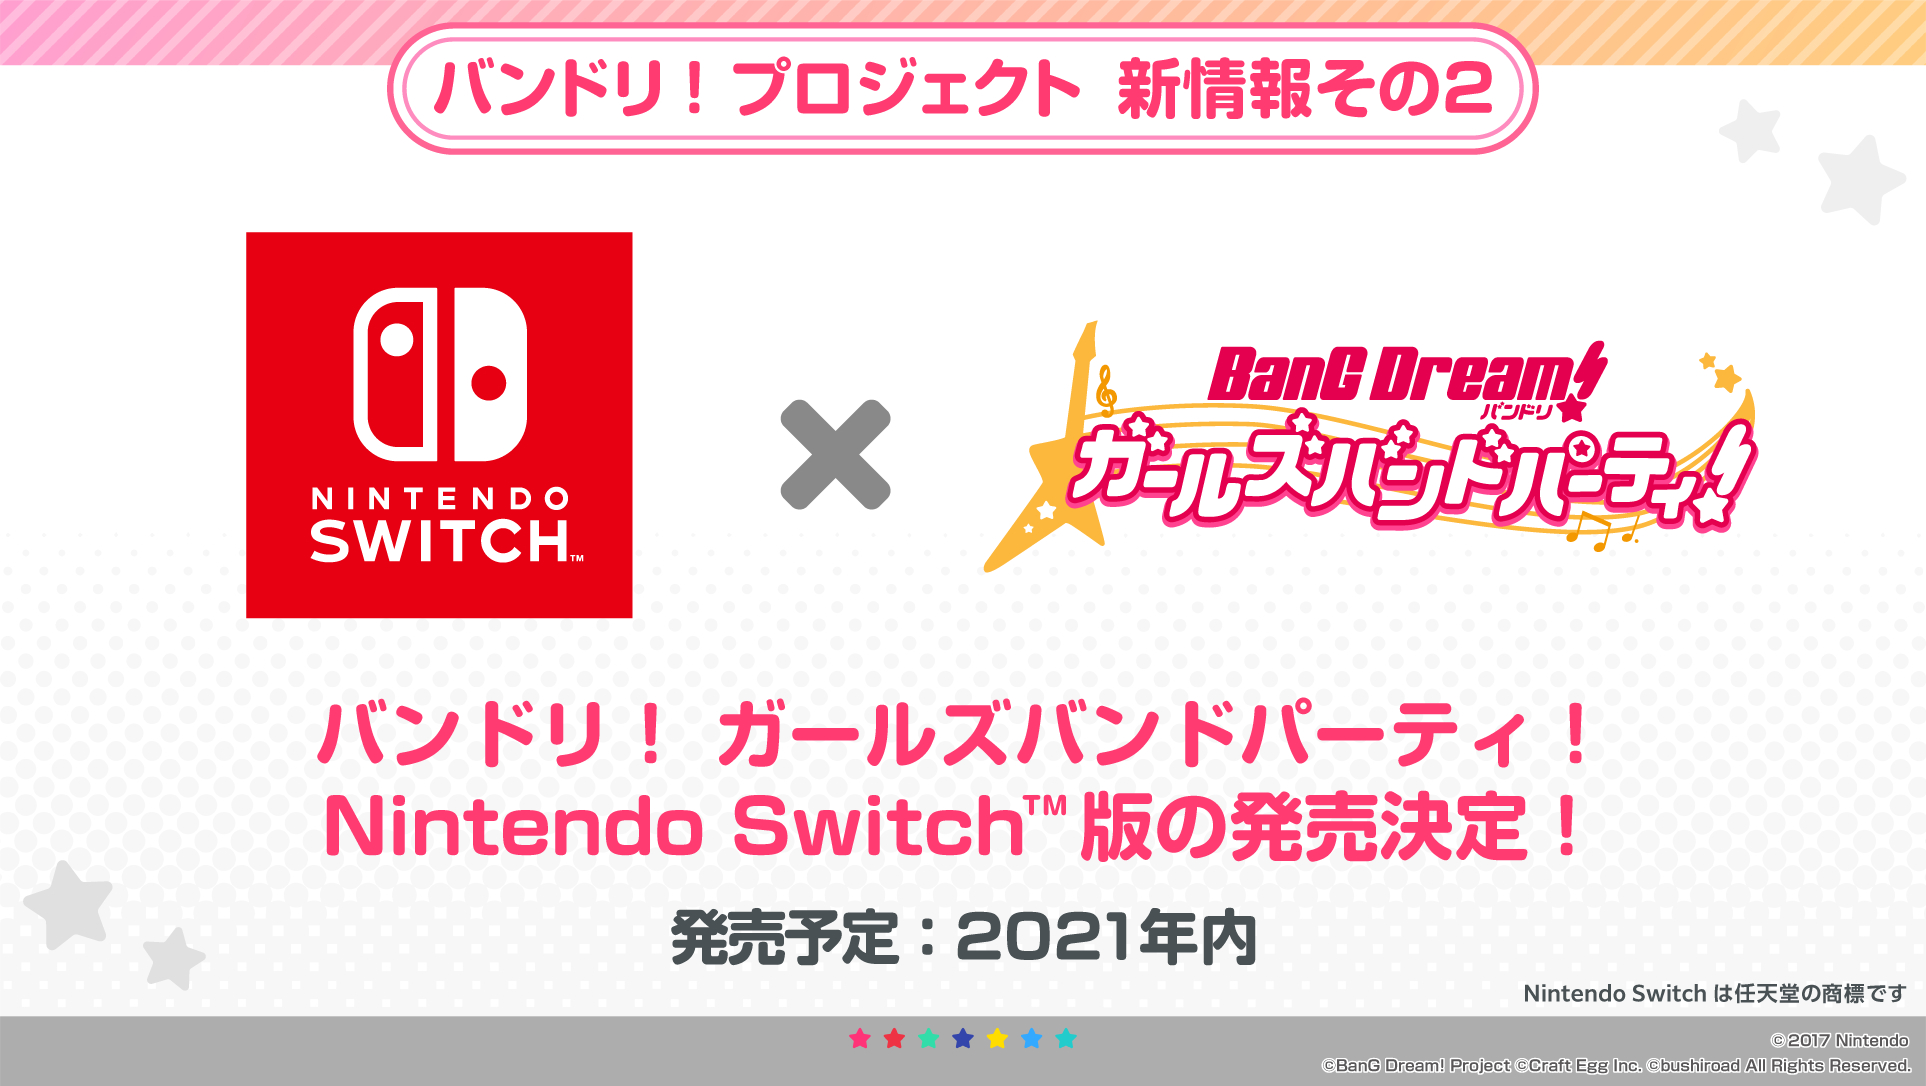 ※Nintendo Switchは任天堂の商標です。 (C)2017 Nintendo